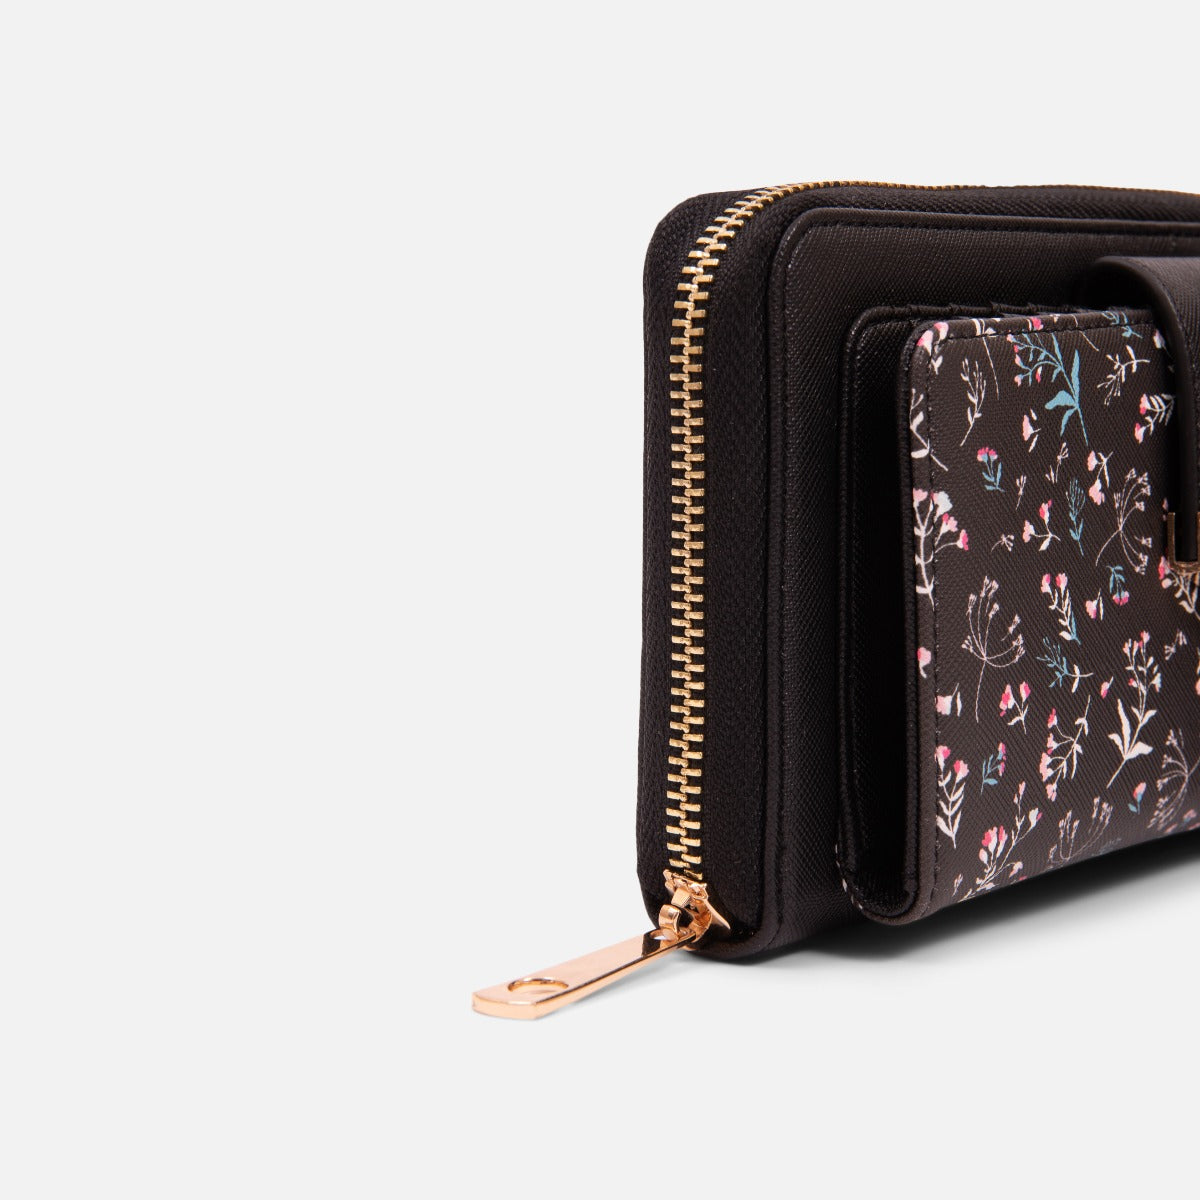 Black and floral patterns wallet